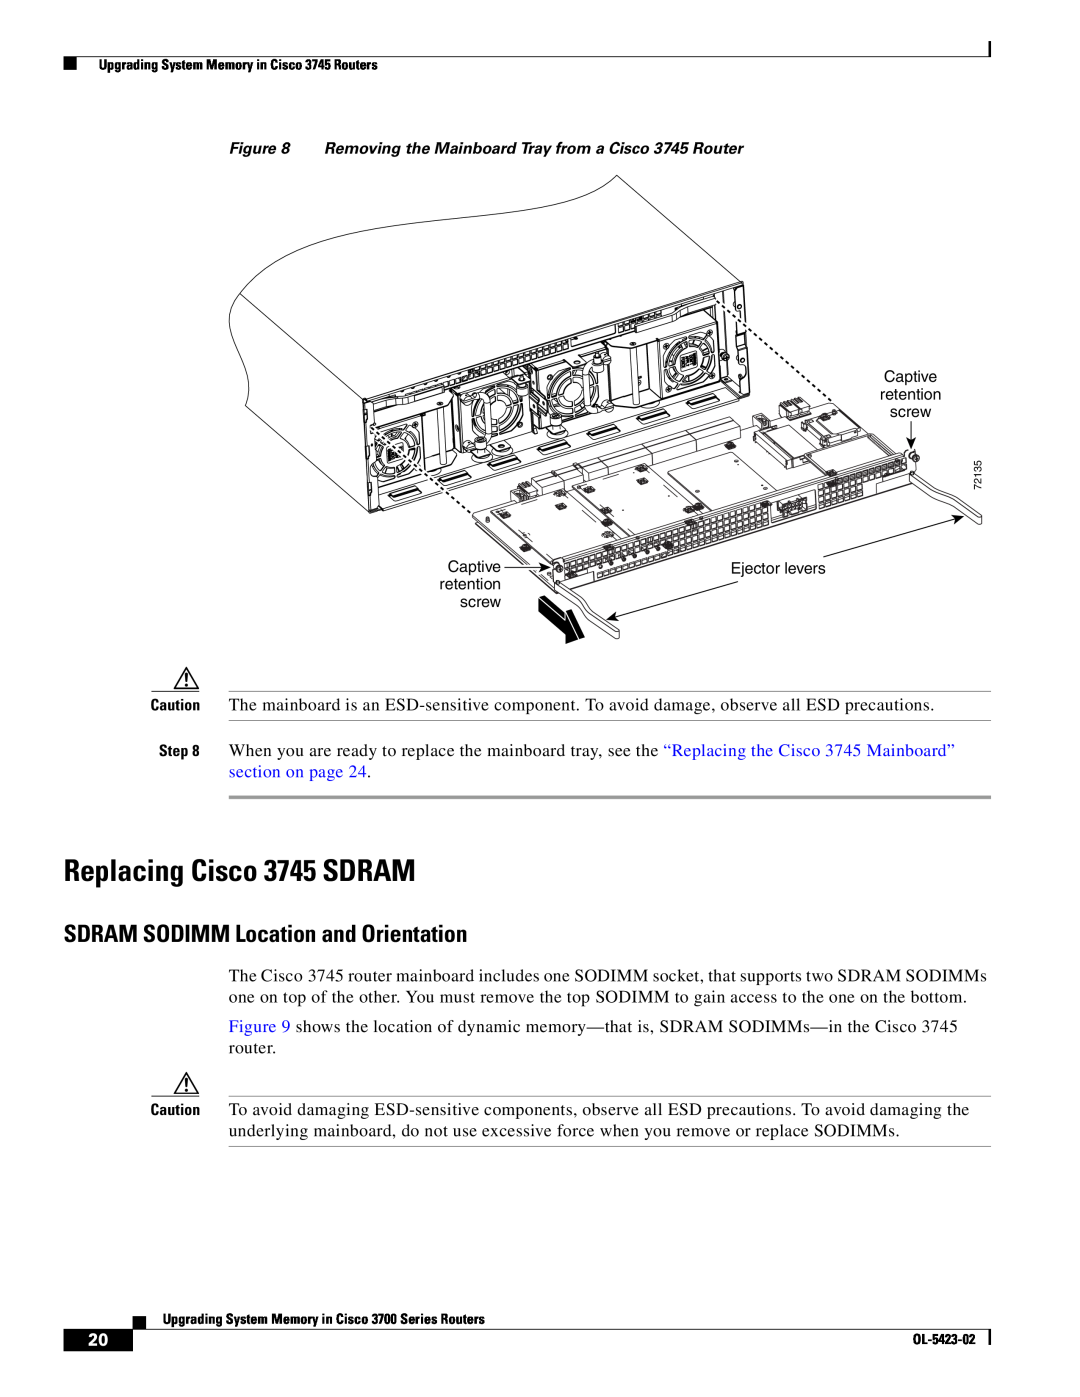 Cisco Systems 3745 Series, 3600 Series, 3725 Series manual Replacing Cisco 3745 SDRAM, SDRAM SODIMM Location and Orientation 